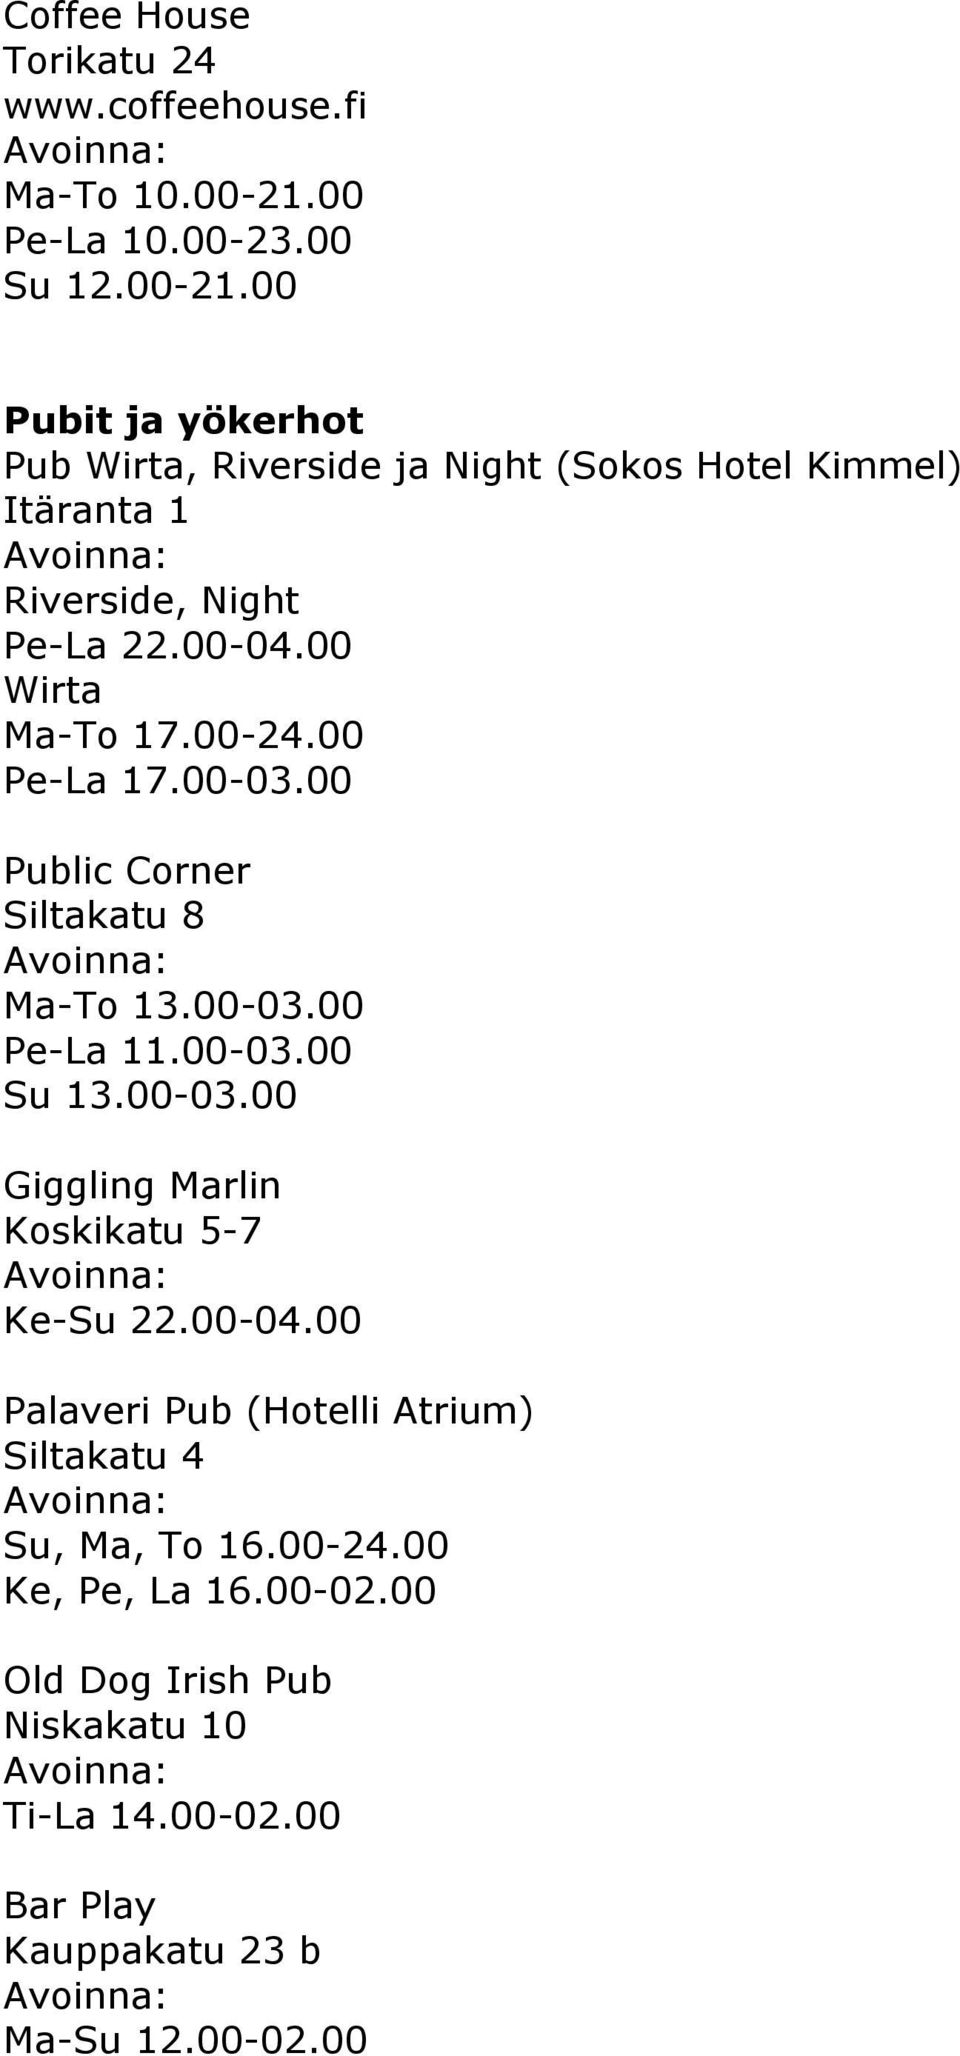 00 Pubit ja yökerhot Pub Wirta, Riverside ja Night (Sokos Hotel Kimmel) Itäranta 1 Riverside, Night Pe-La 22.00-04.00 Wirta Ma-To 17.00-24.